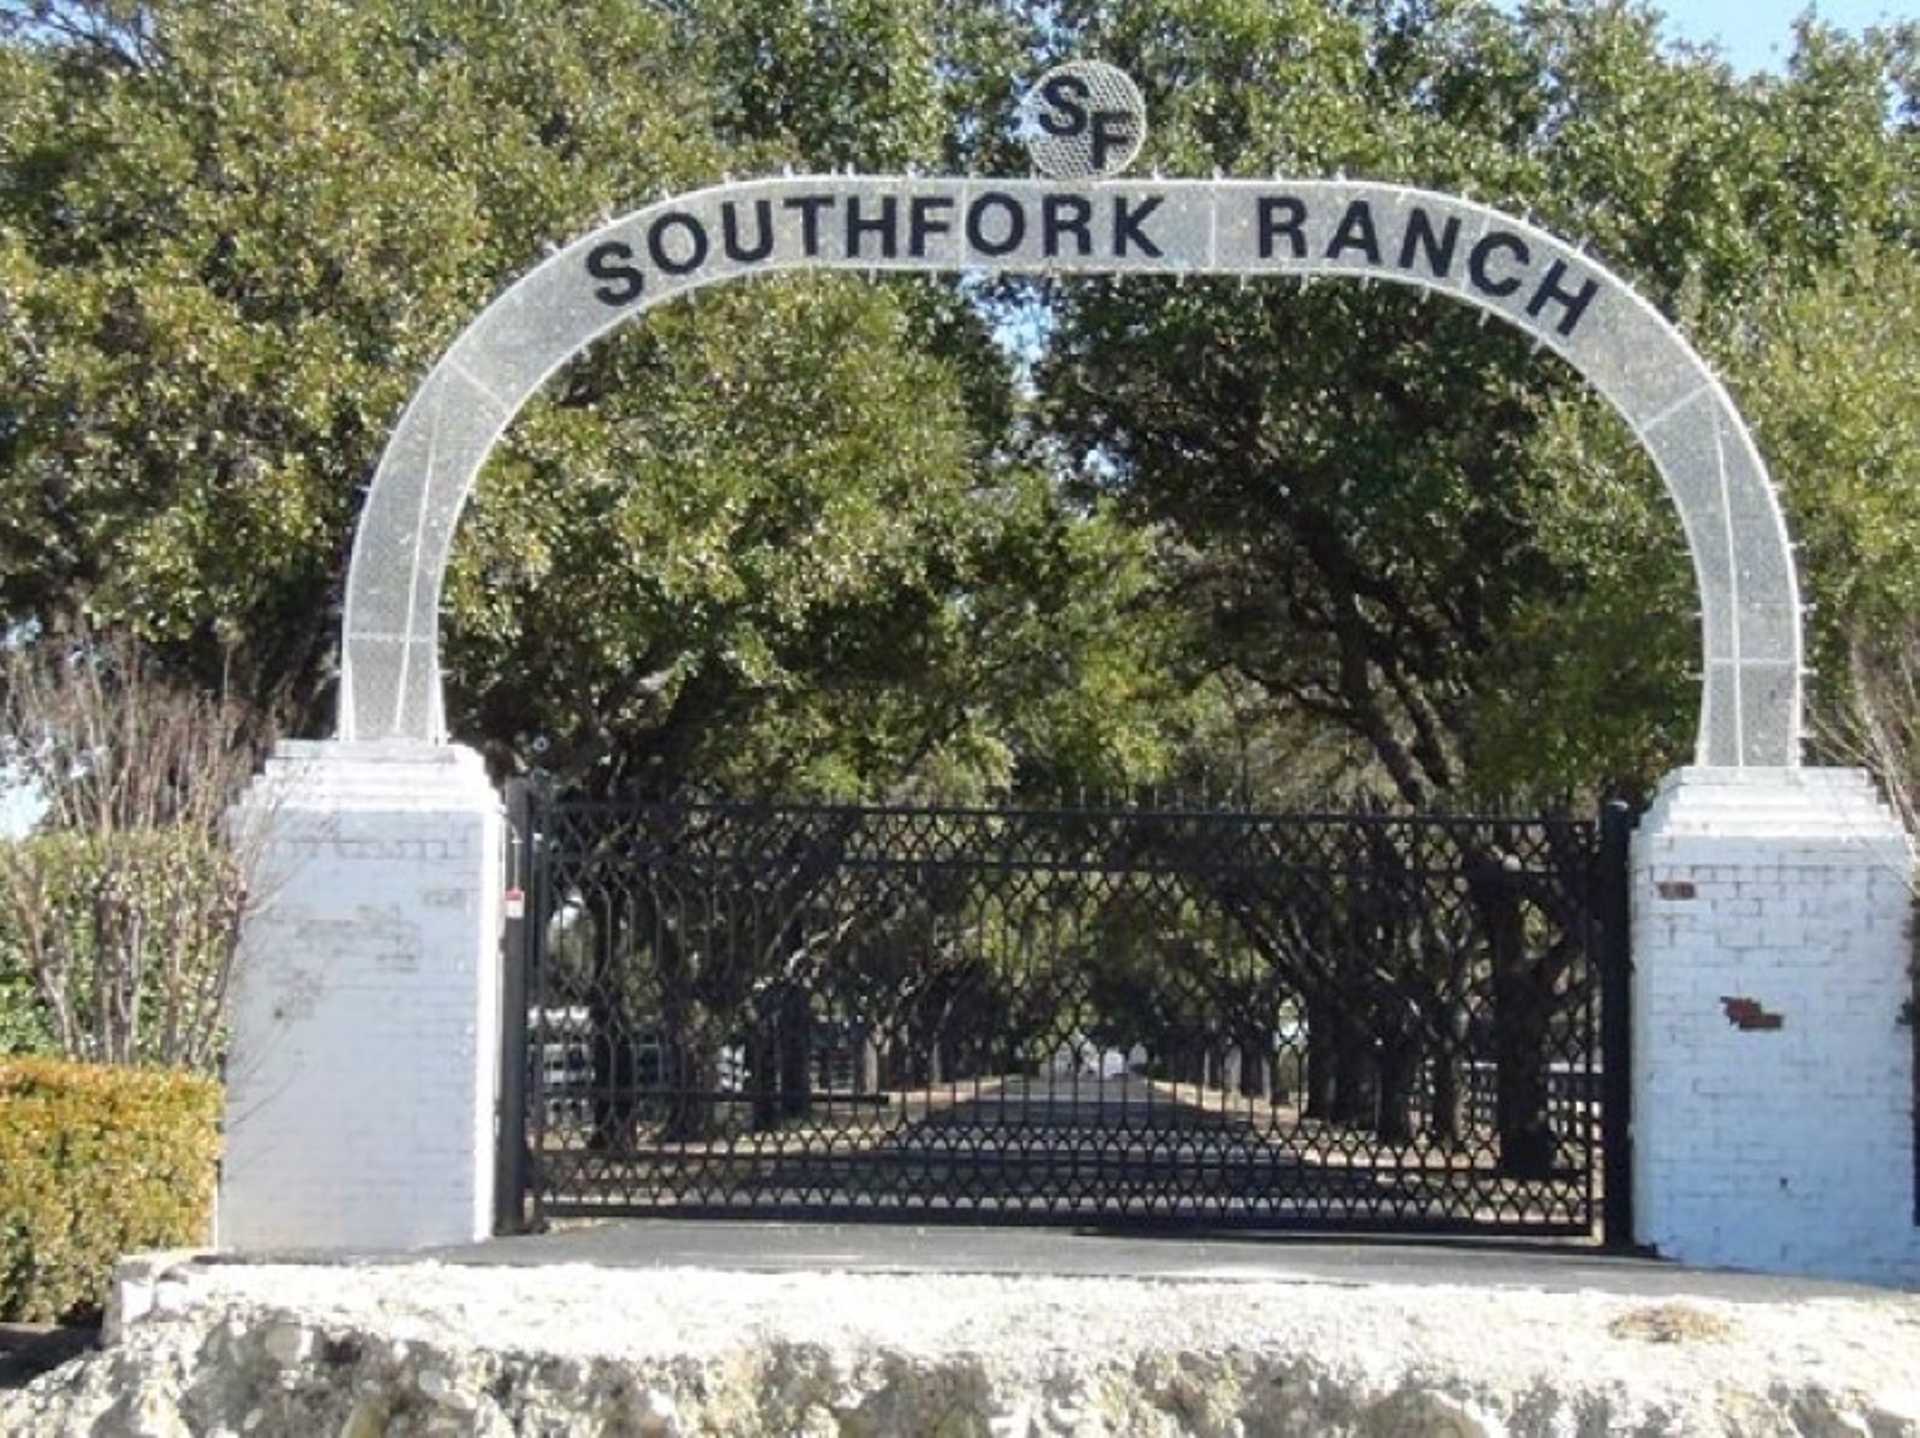 Dallas and Southfork Ranch Combination Tour